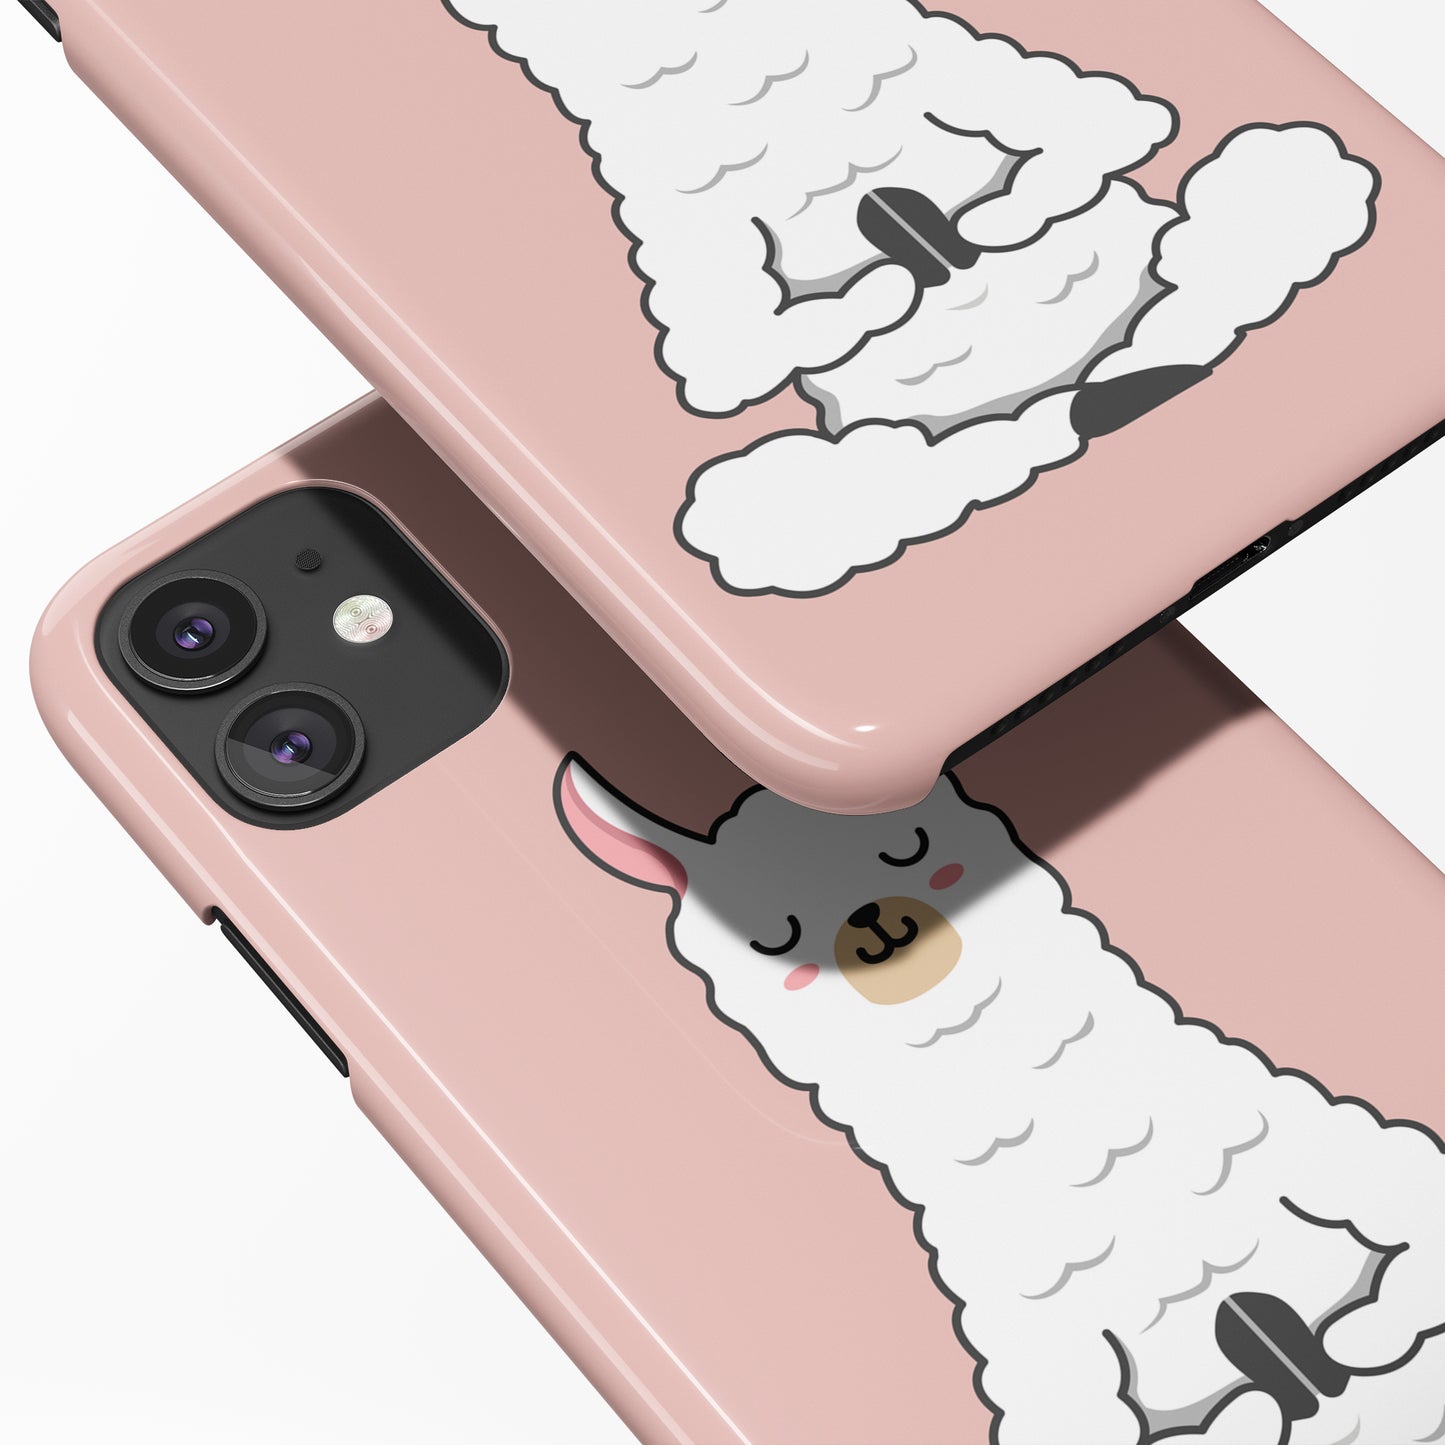 Calm Alpaca iPhone Case